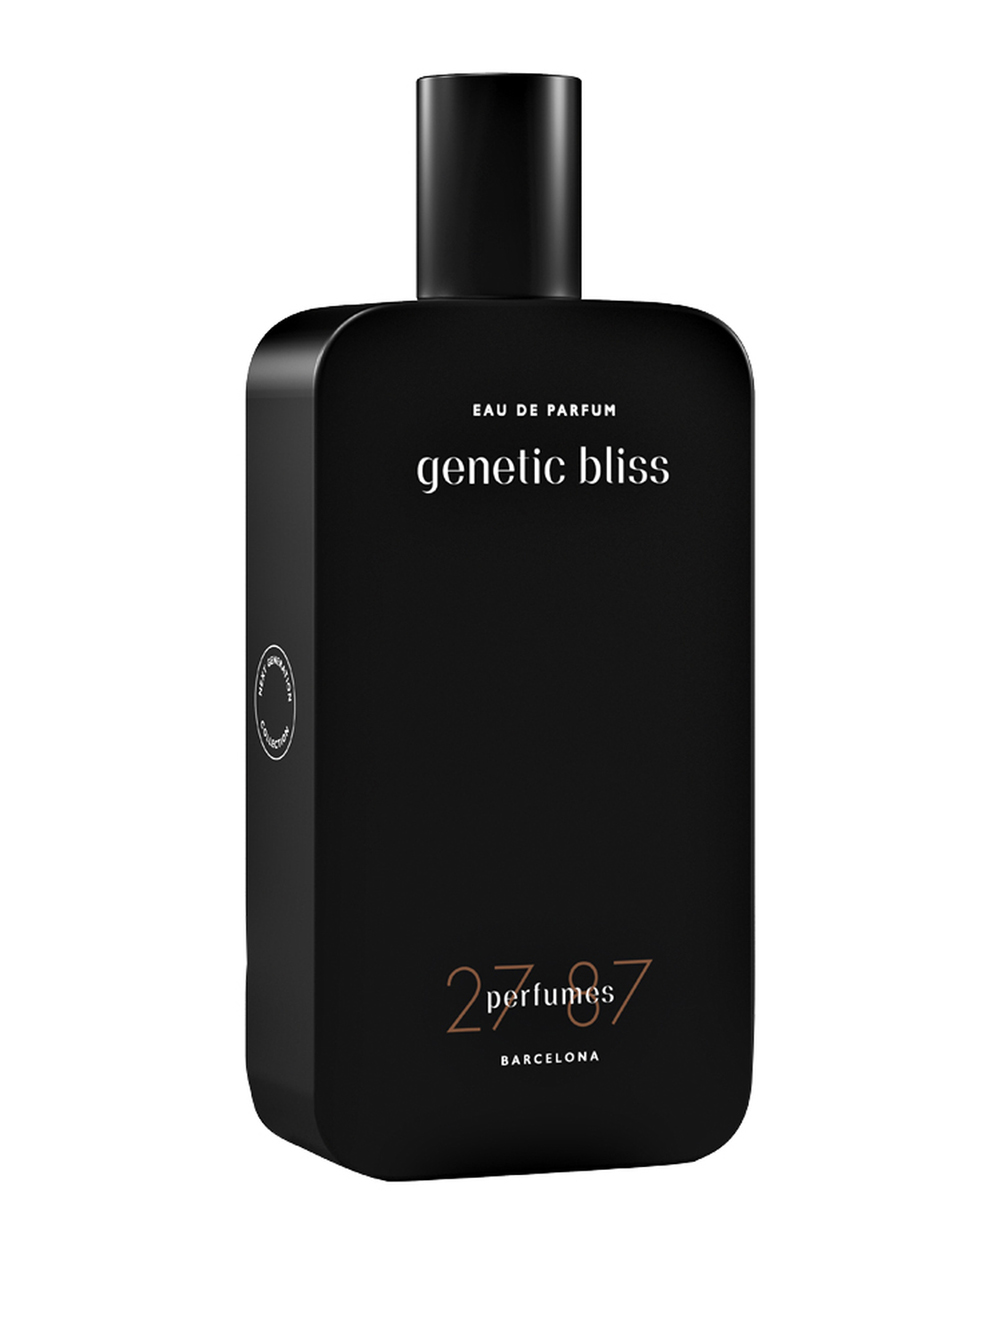 genetic bliss Eau de Parfum 87ml